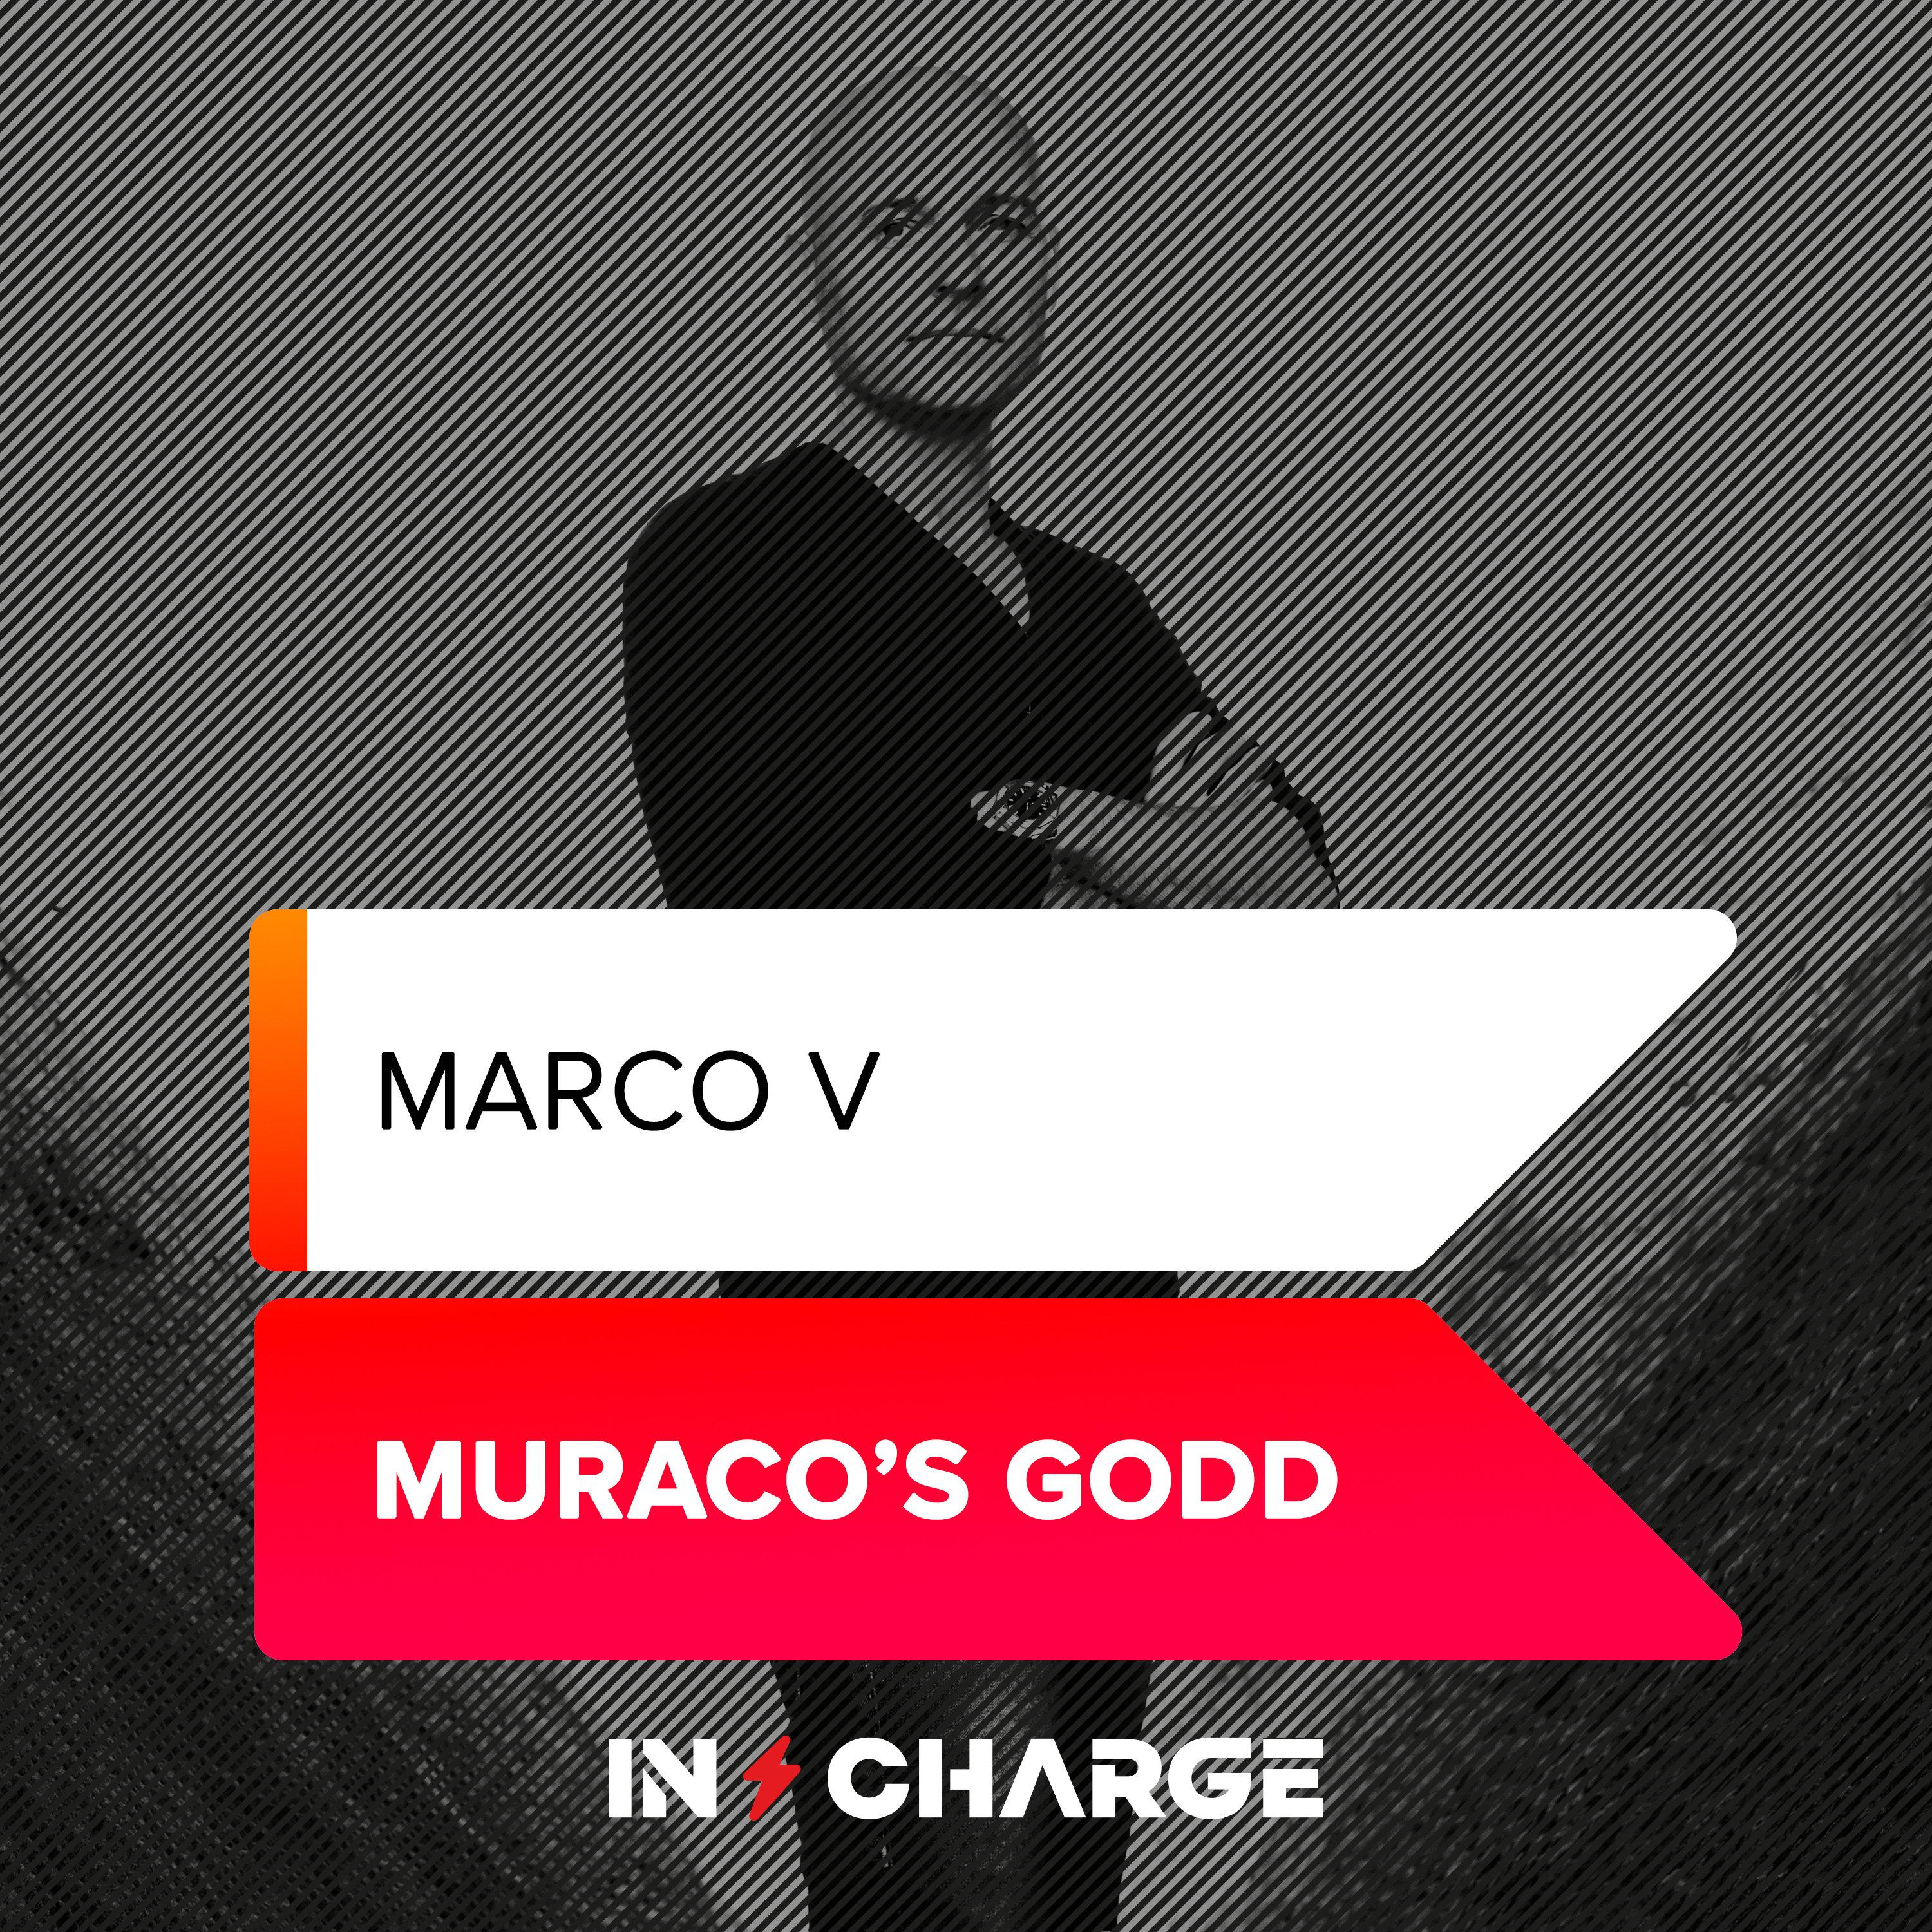 Muraco's Godd